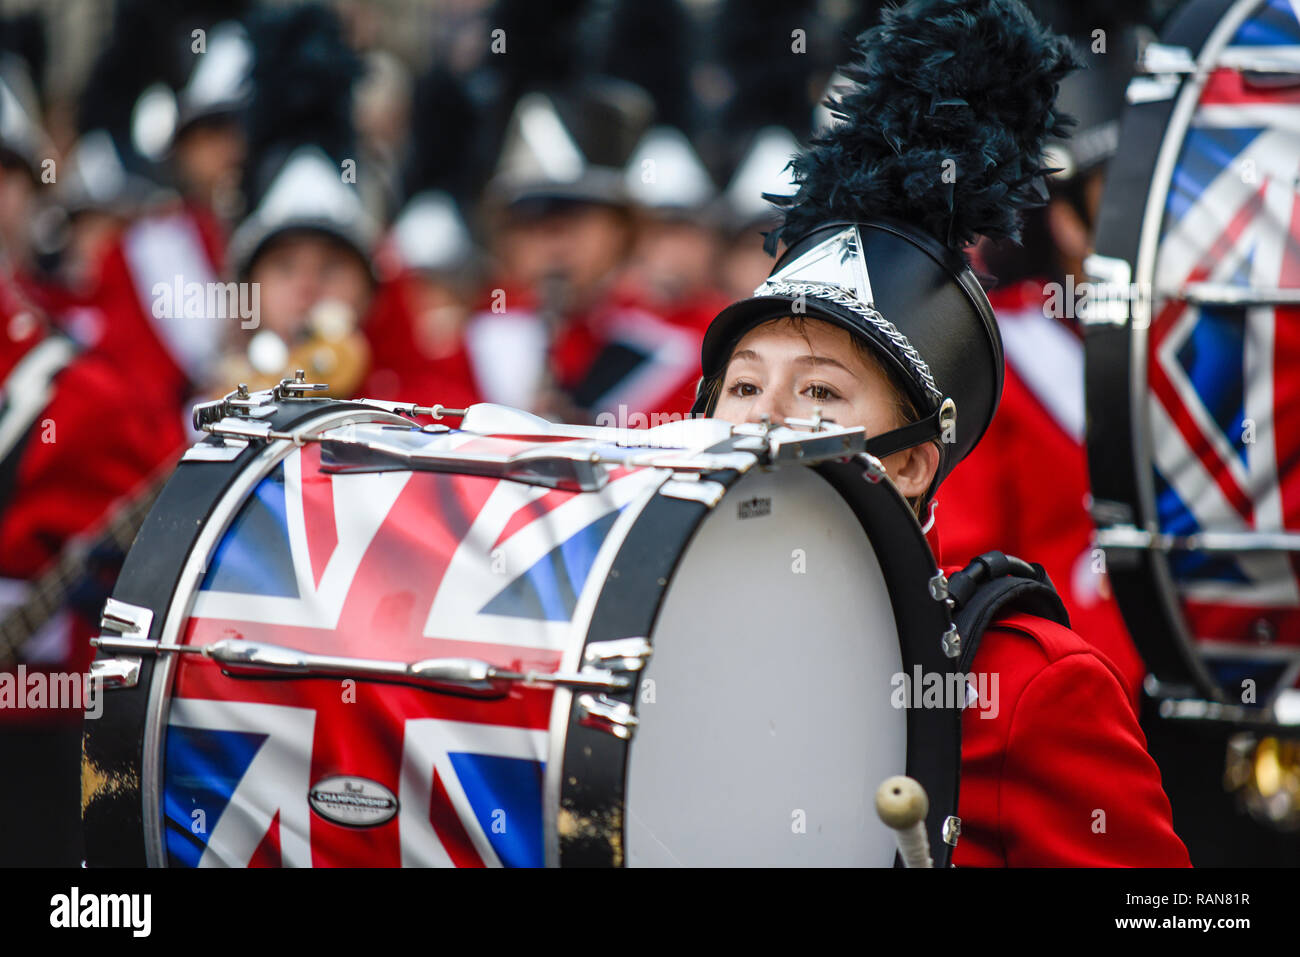 100 Seabreeze High School Marching Band aus Florida, USA, am Tag der Londoner New Year's Parade, UK. Weibliche Mitglied in die Band, Schlagzeuger Stockfoto